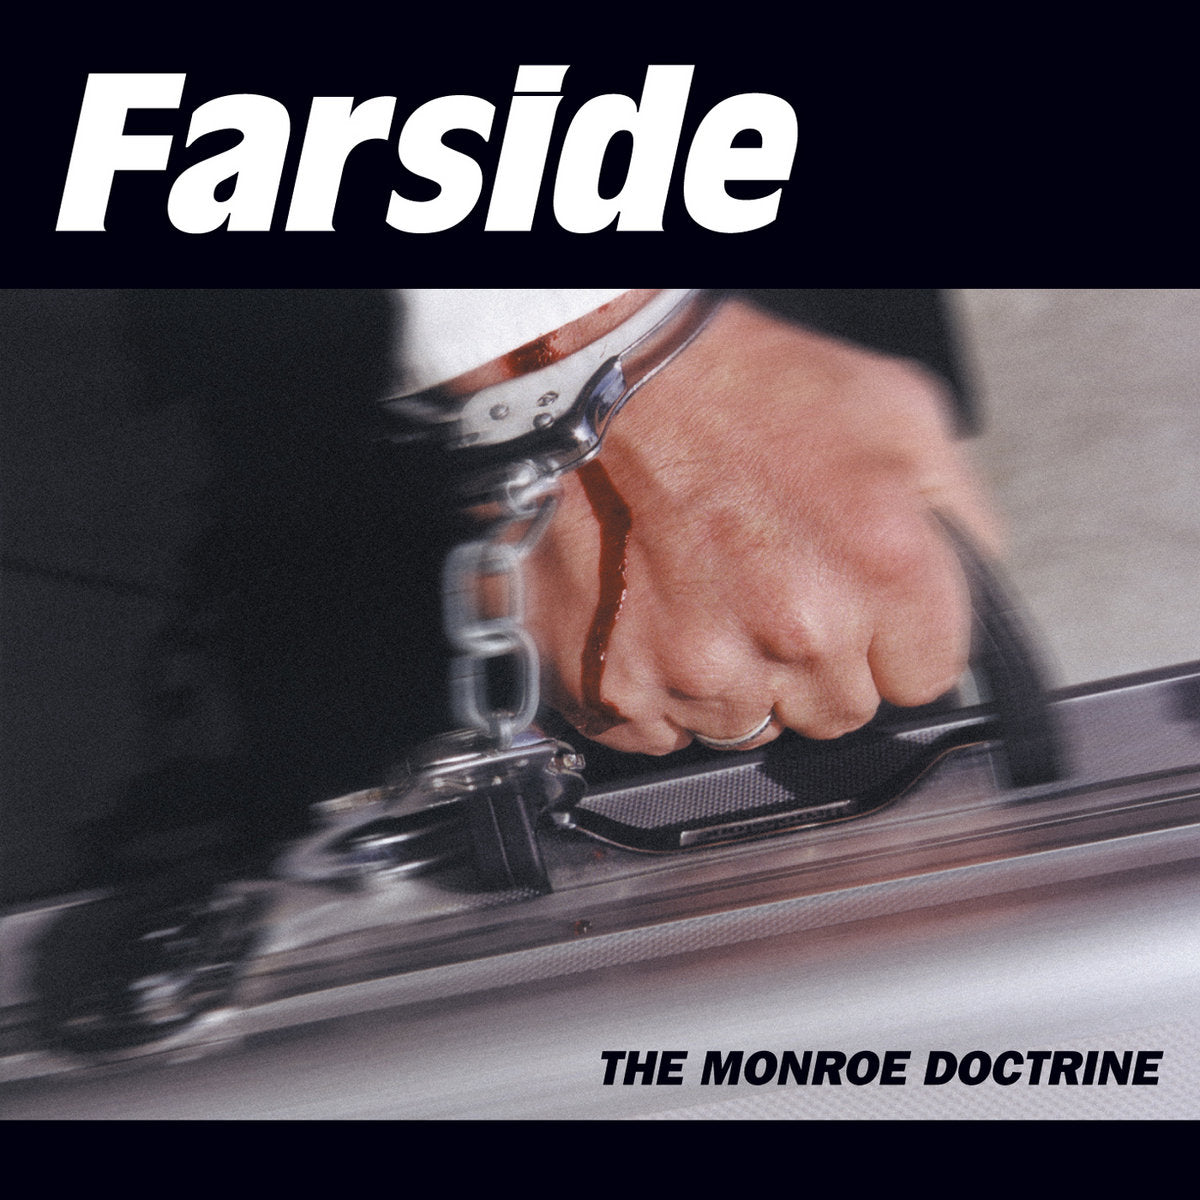 Farside "The Monroe Doctrine" 12" Vinyl